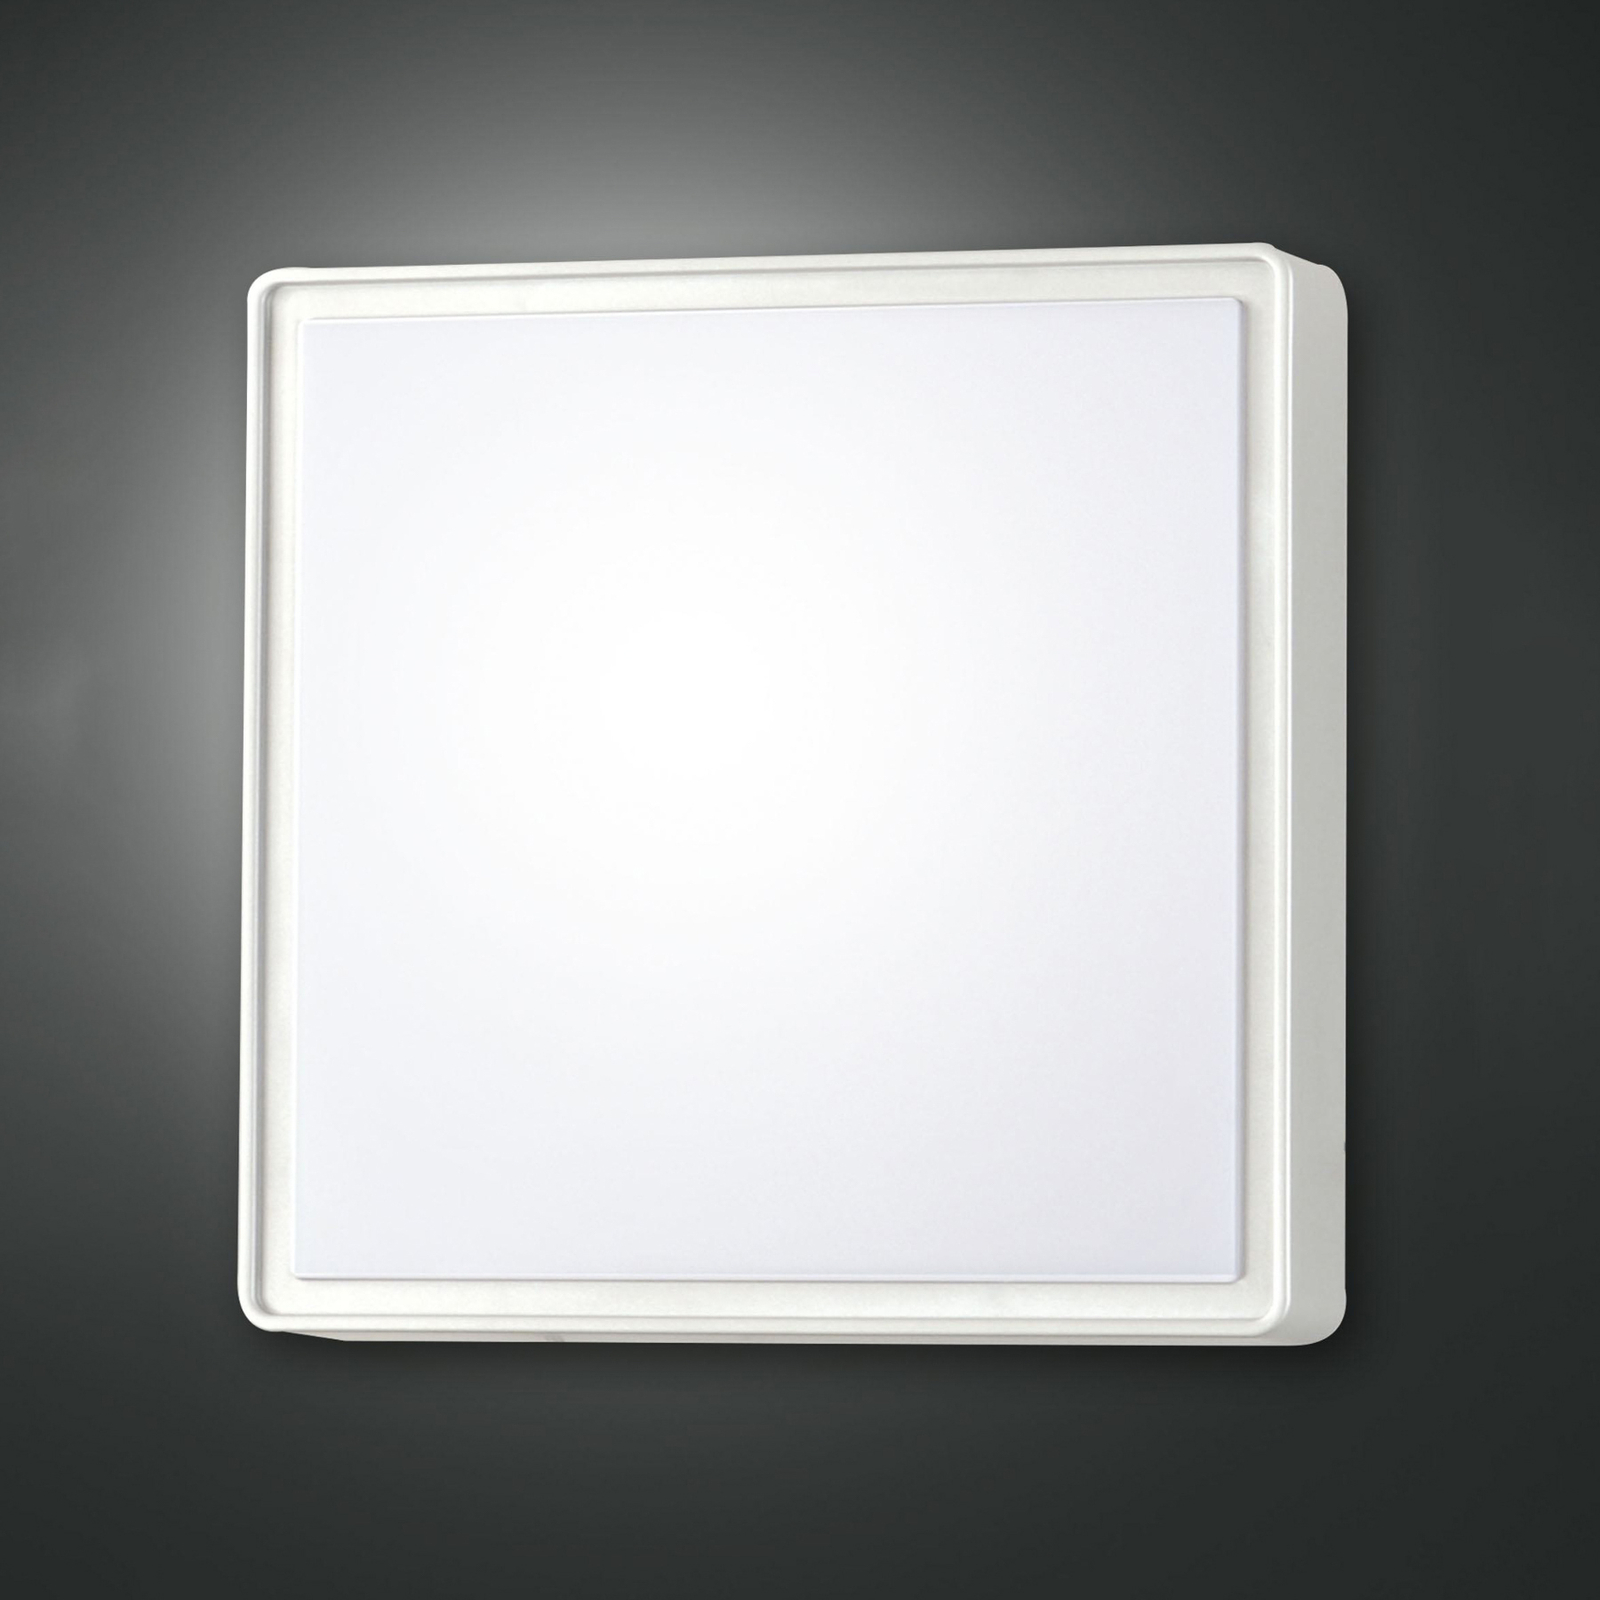 Oban wall light, 30 cm x 30 cm, sensor, 2 x E27, white, IP65